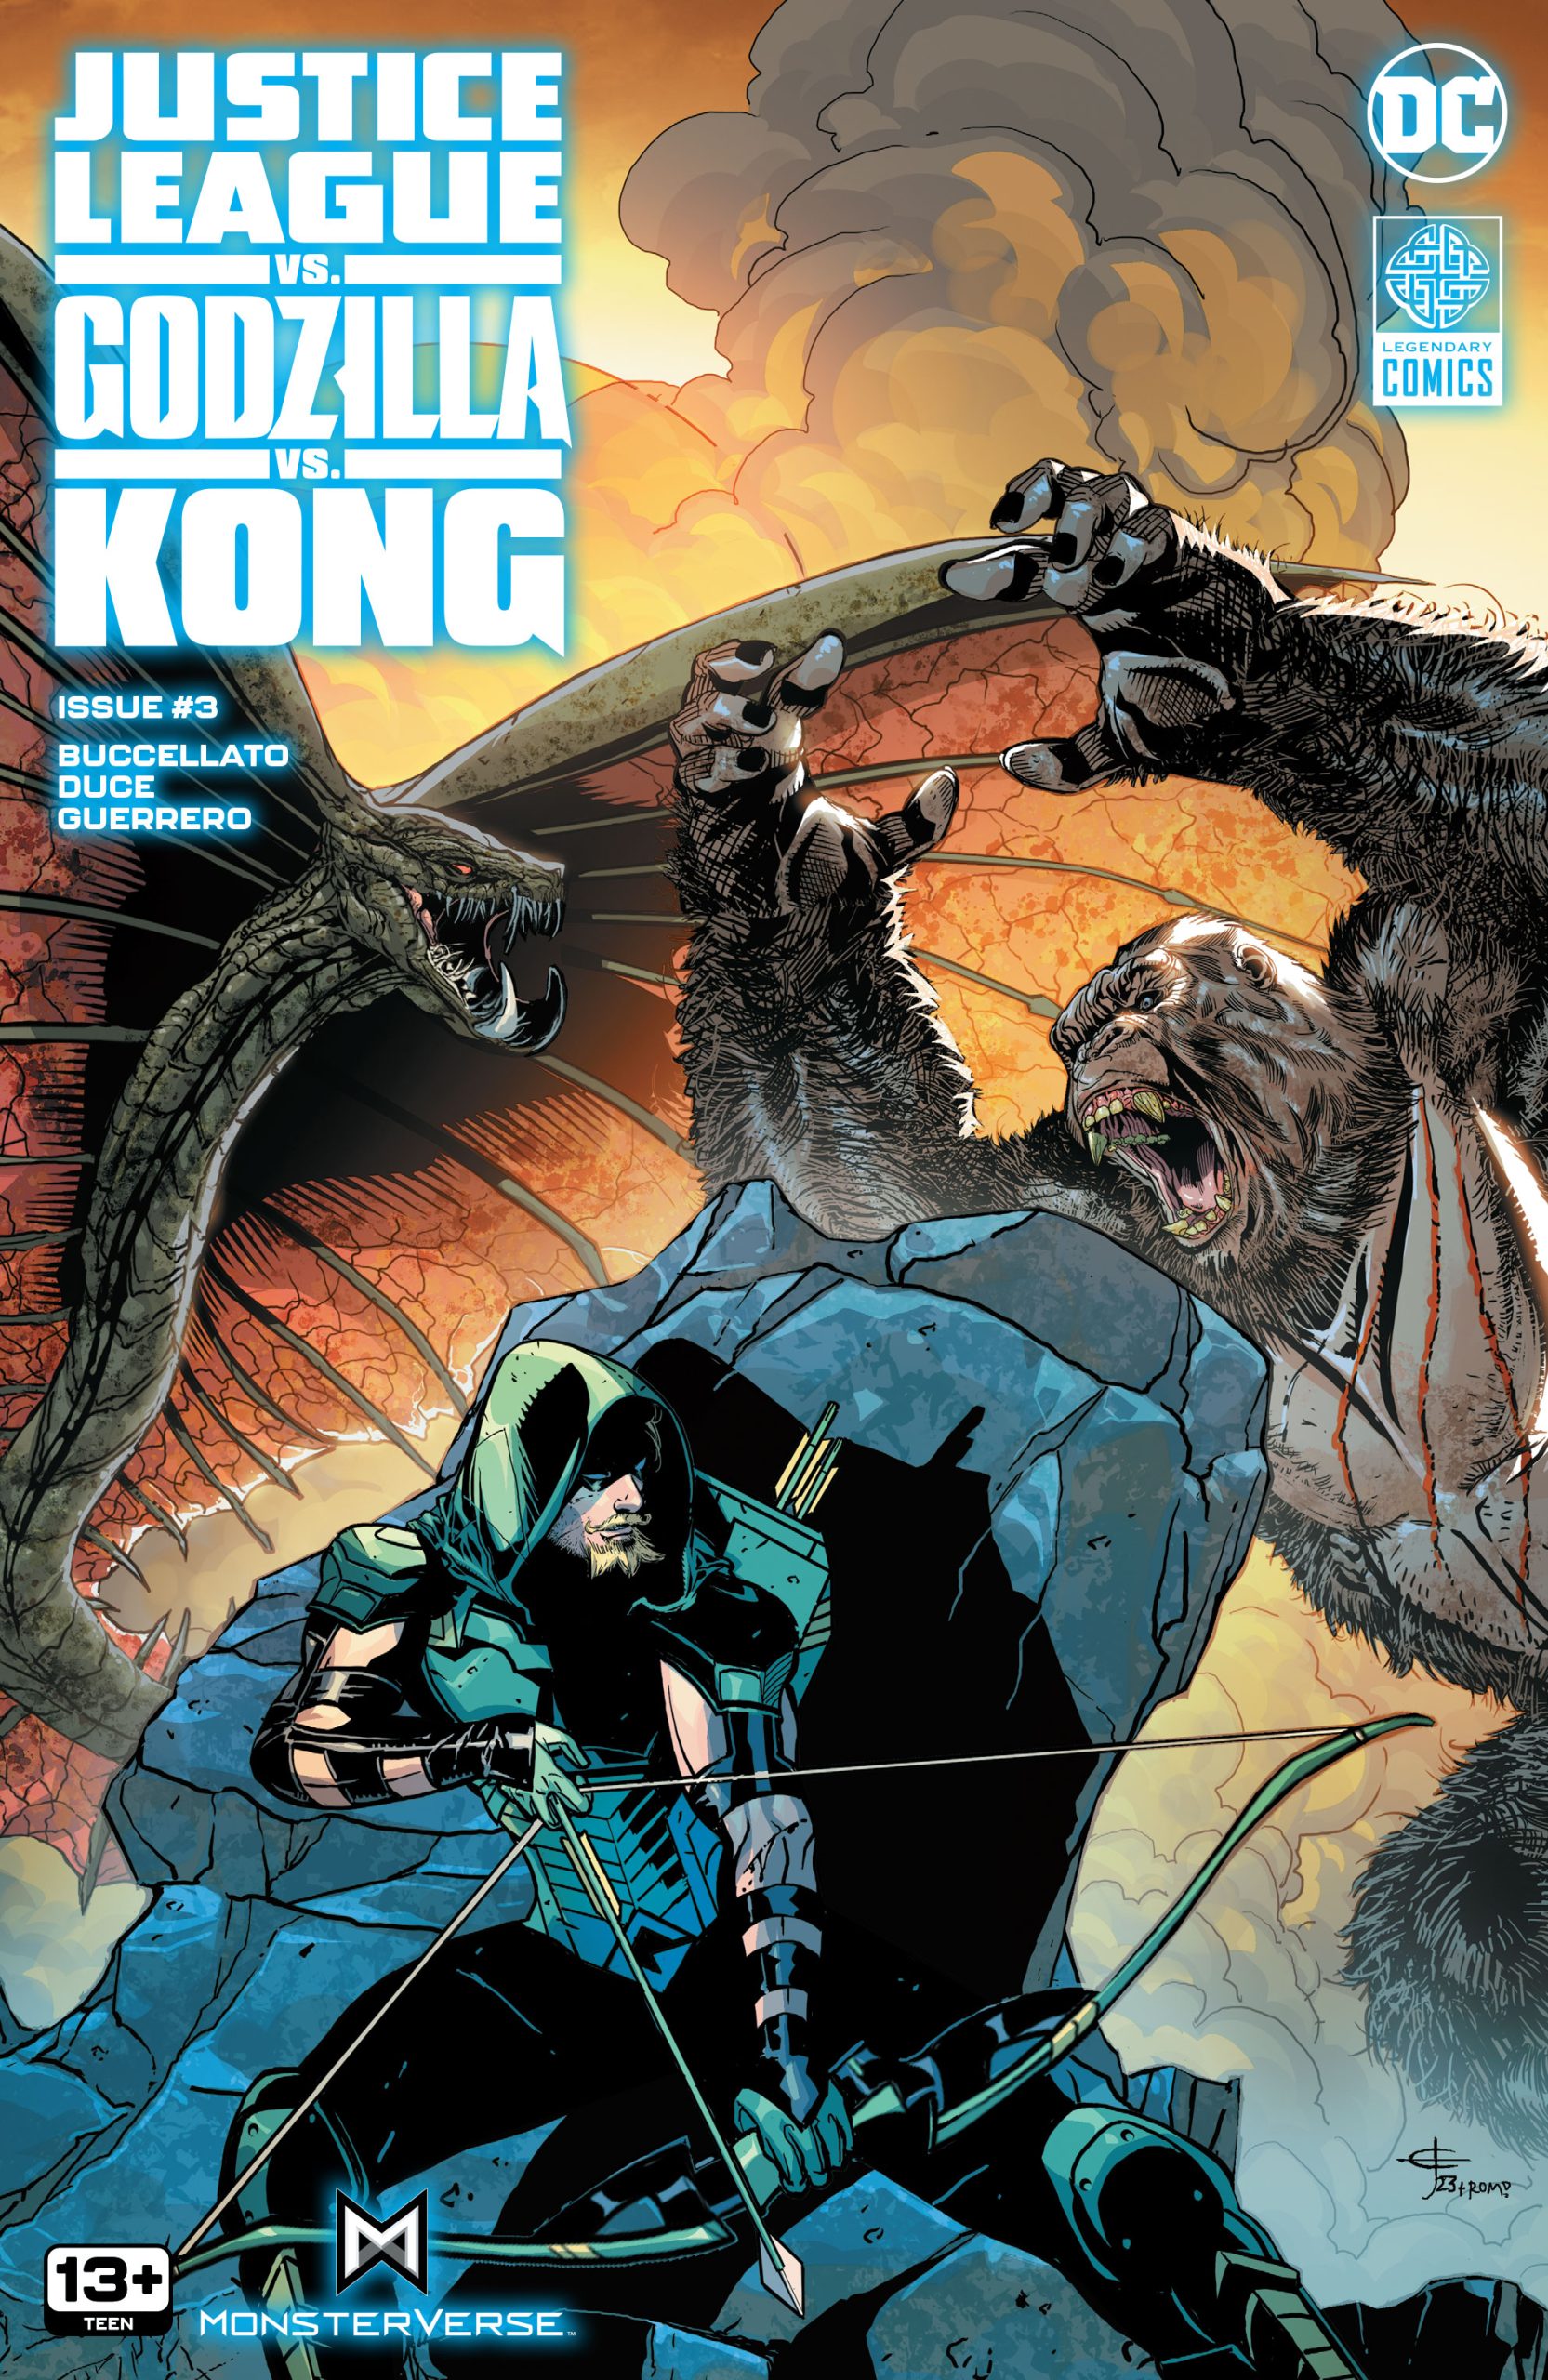 DC Preview: Justice League vs. Godzilla vs. Kong #3